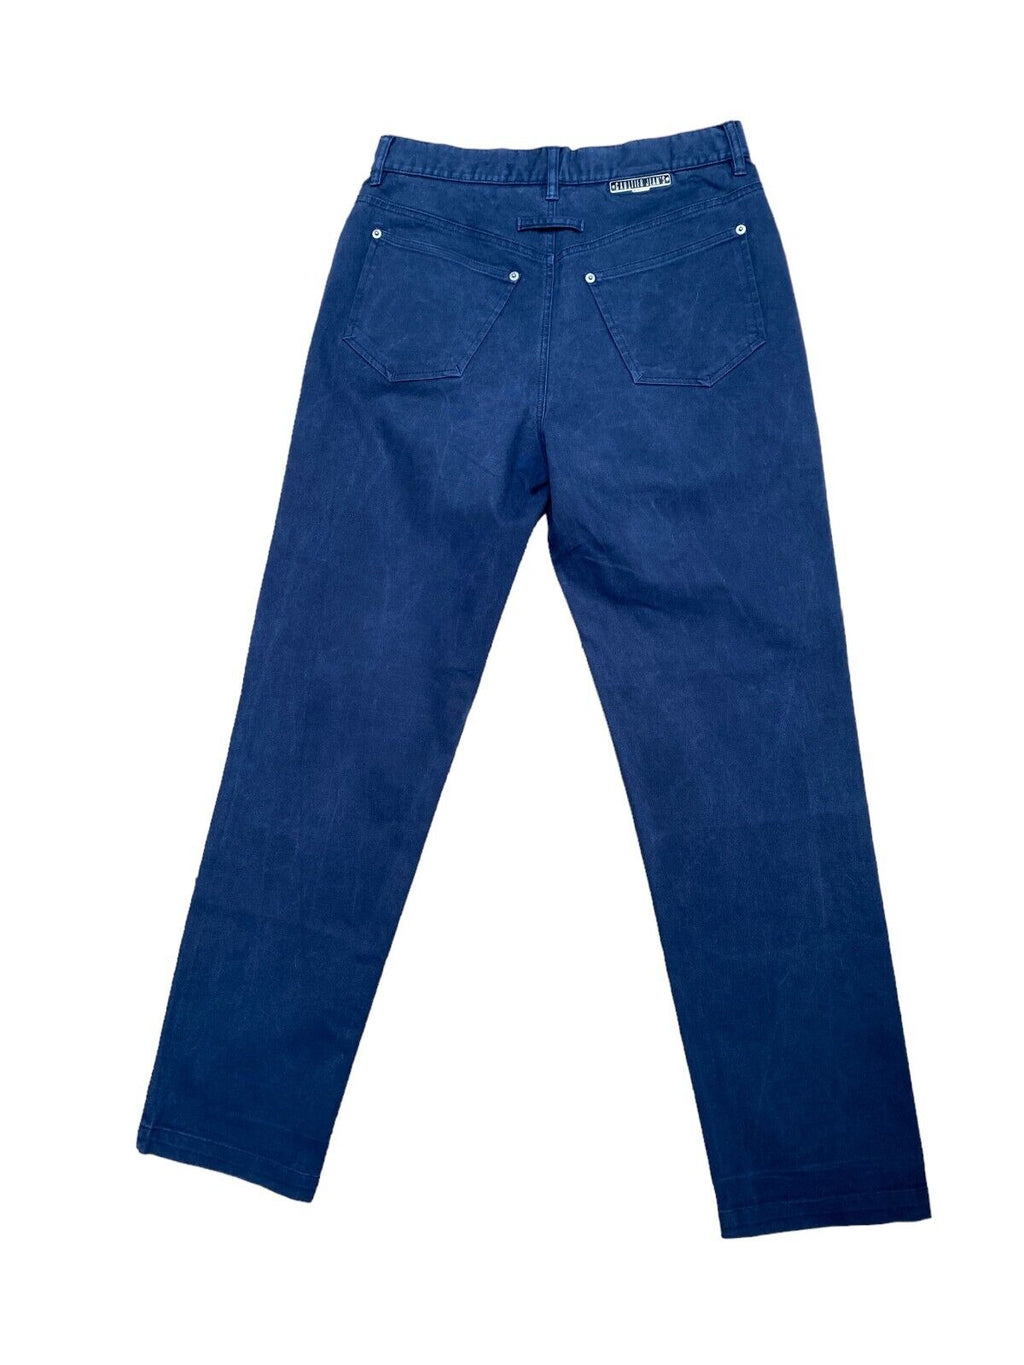 Vintage JPG Jeans Navy Denim pants  Size US 30